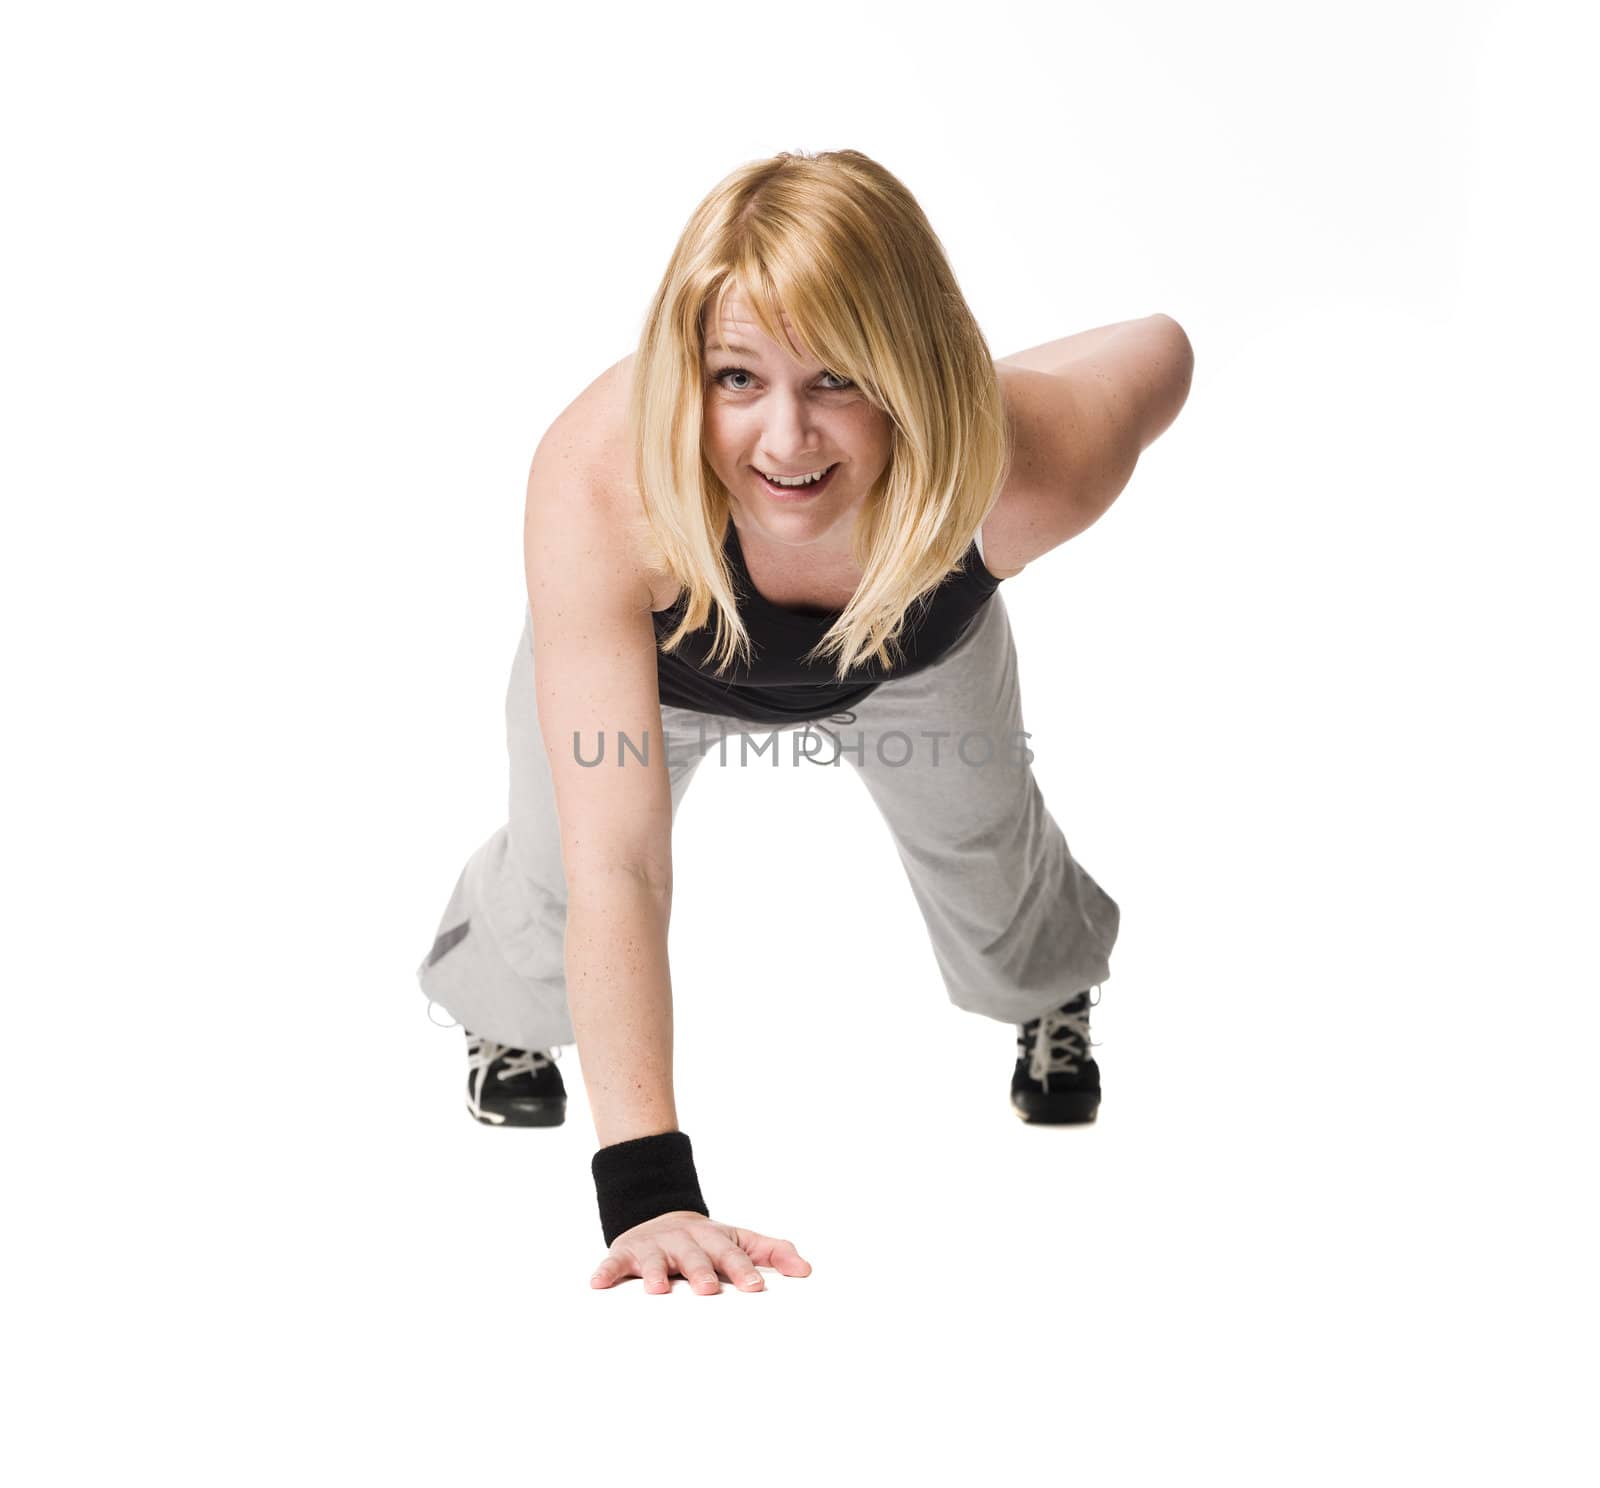 Woman doing push ups by gemenacom